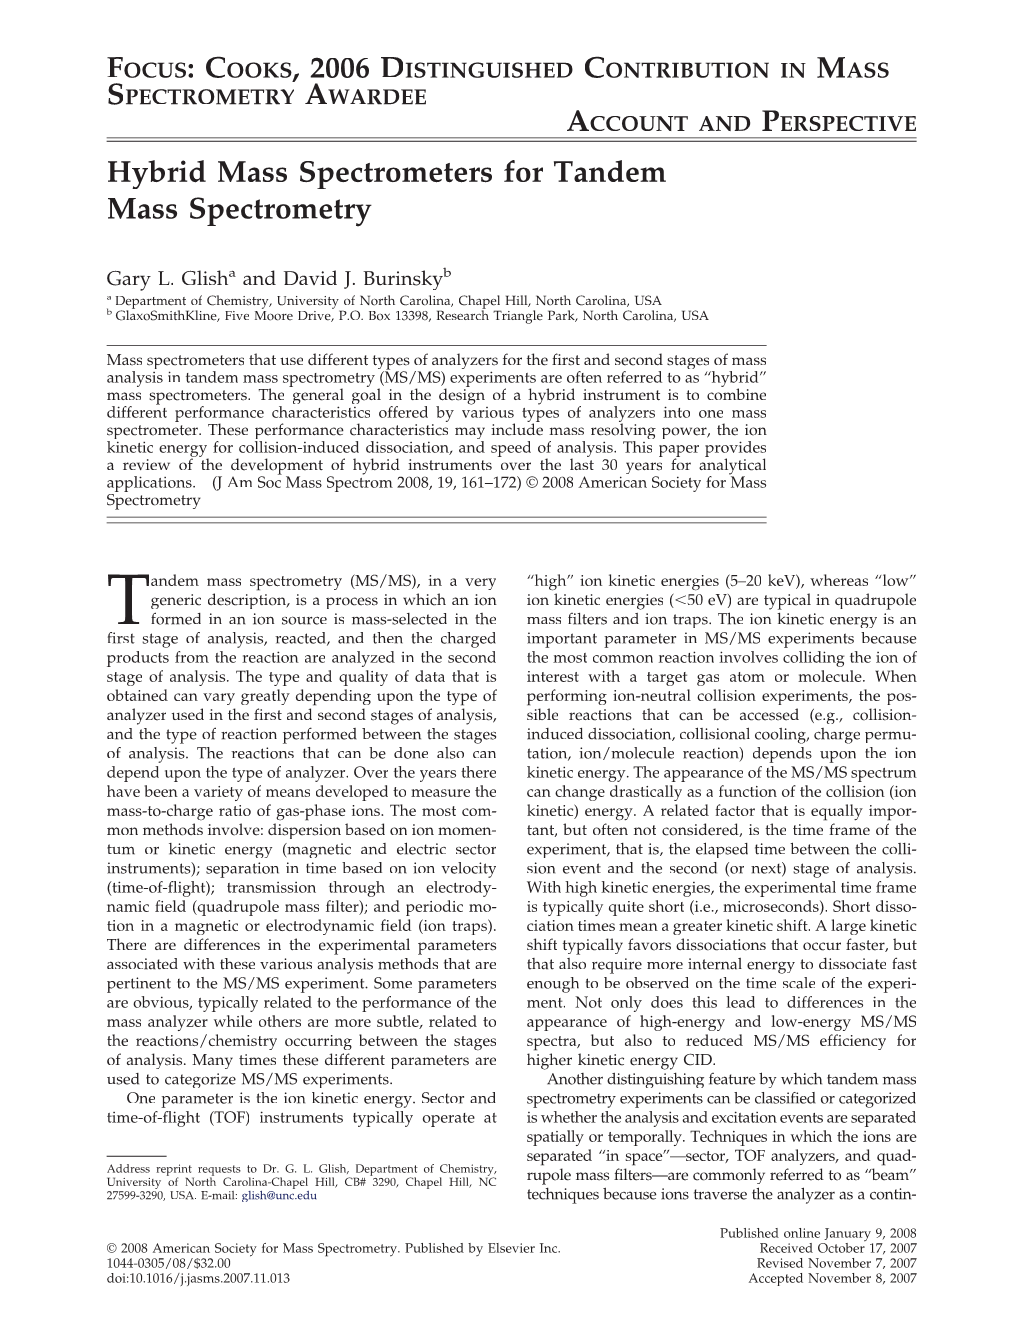 Hybrid Mass Spectrometers for Tandem Mass Spectrometry